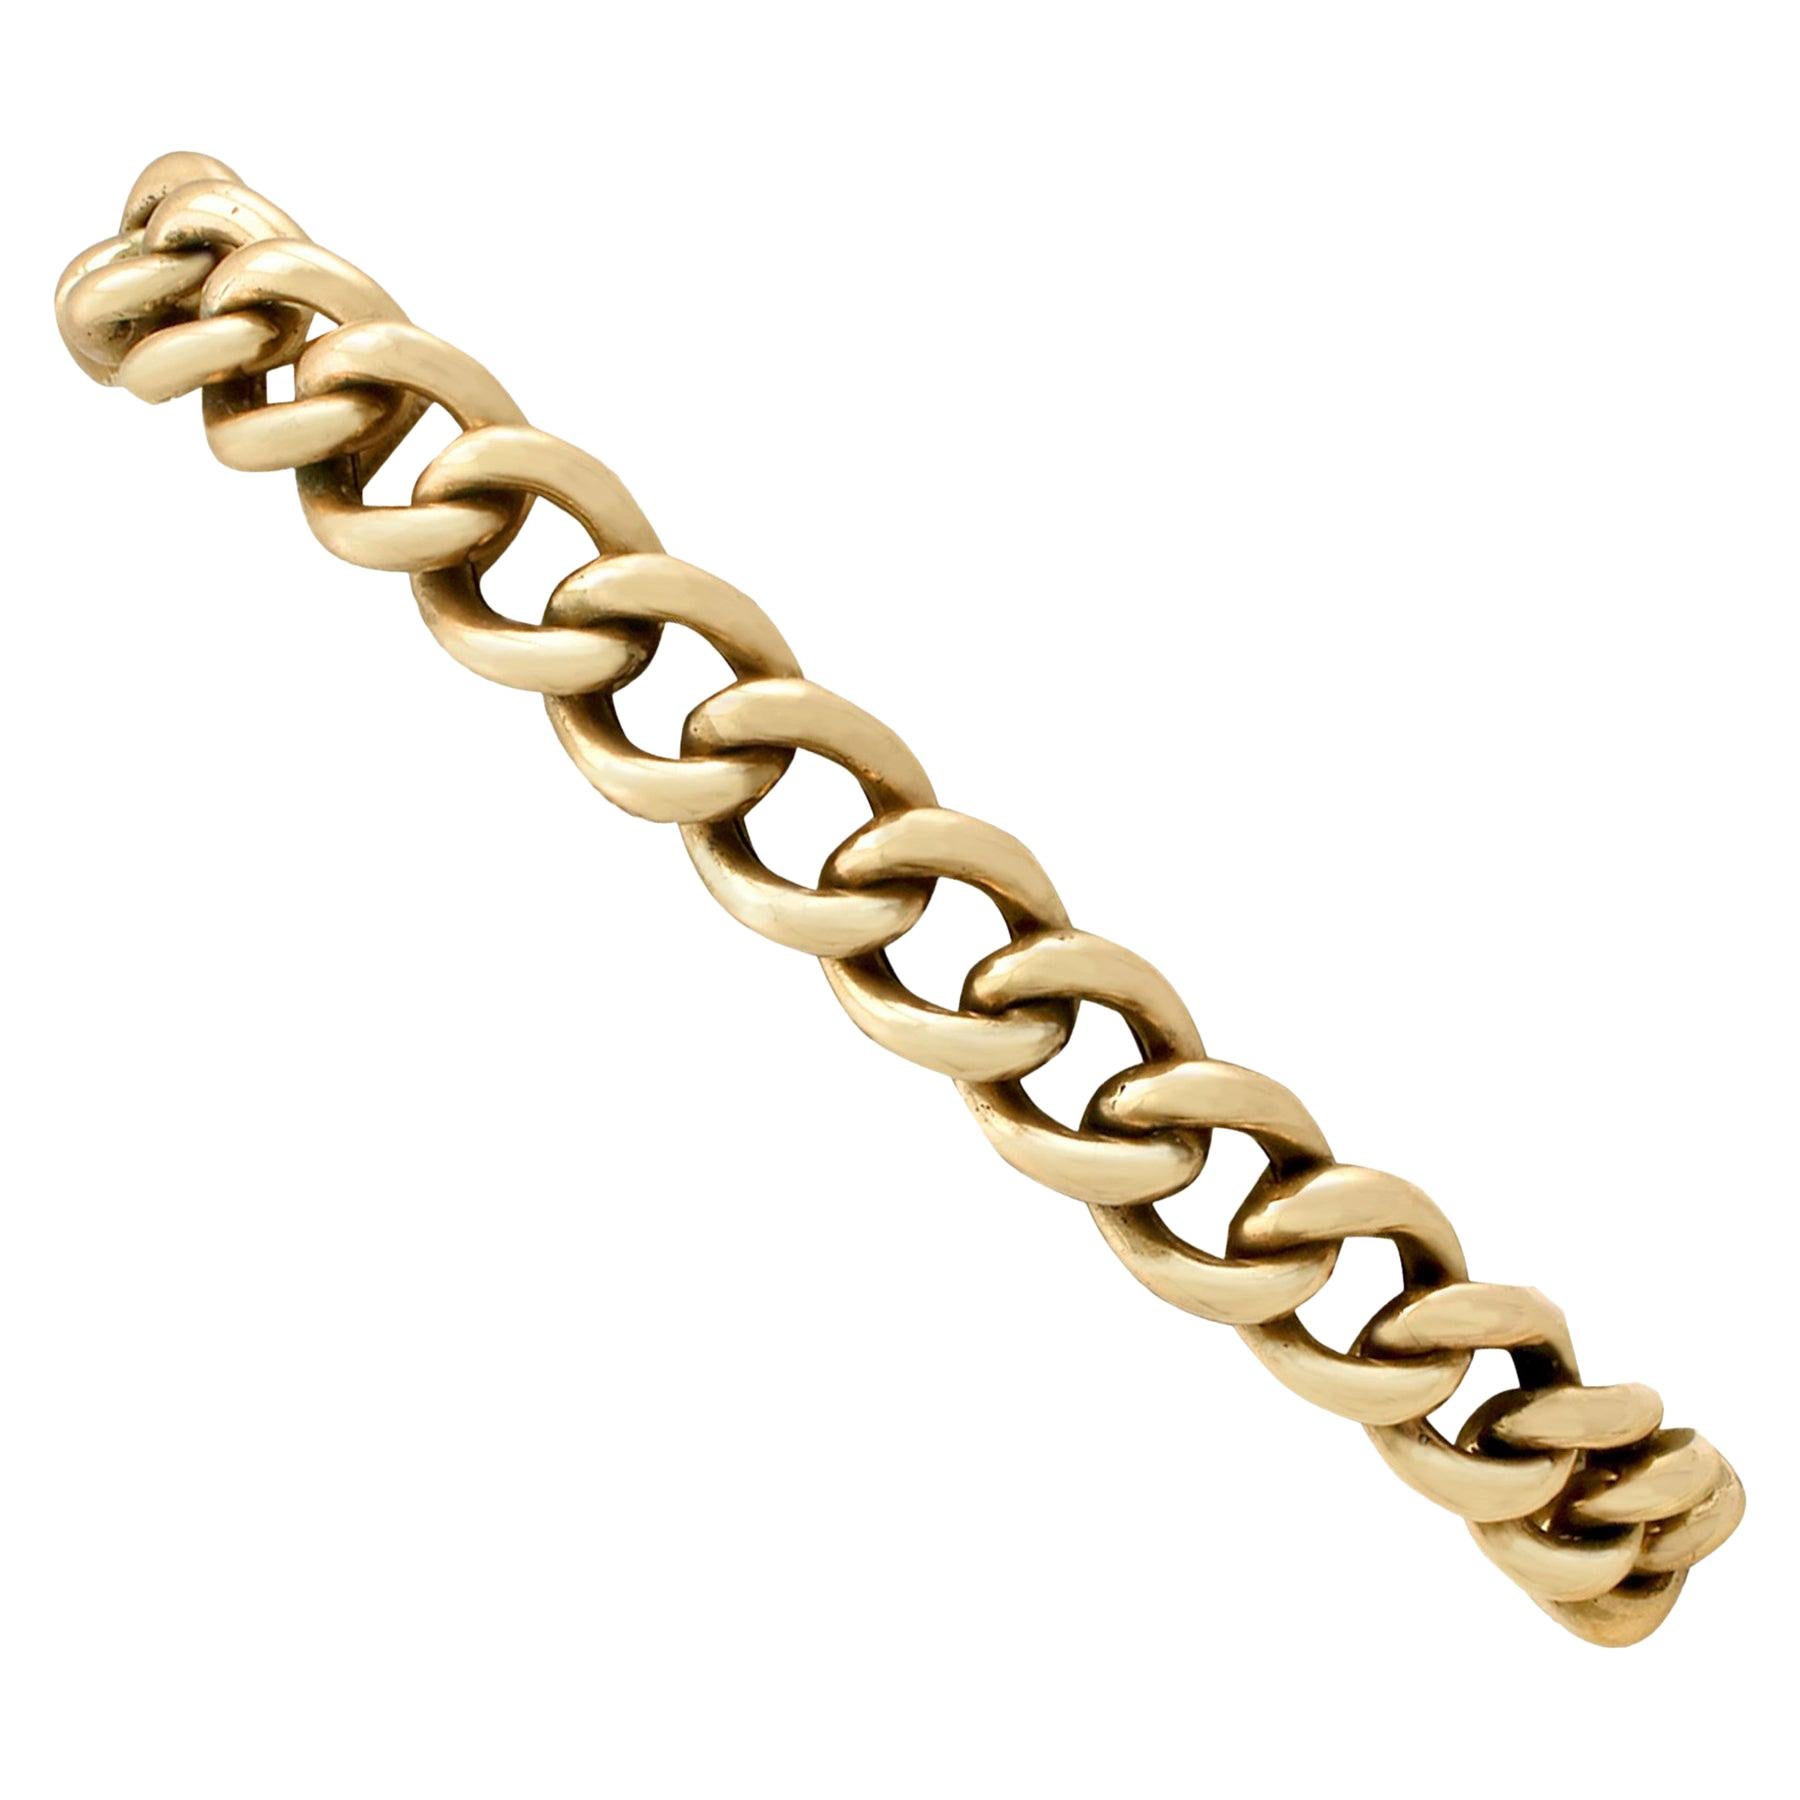 Antique 1900s Yellow Gold Curb Link Bracelet